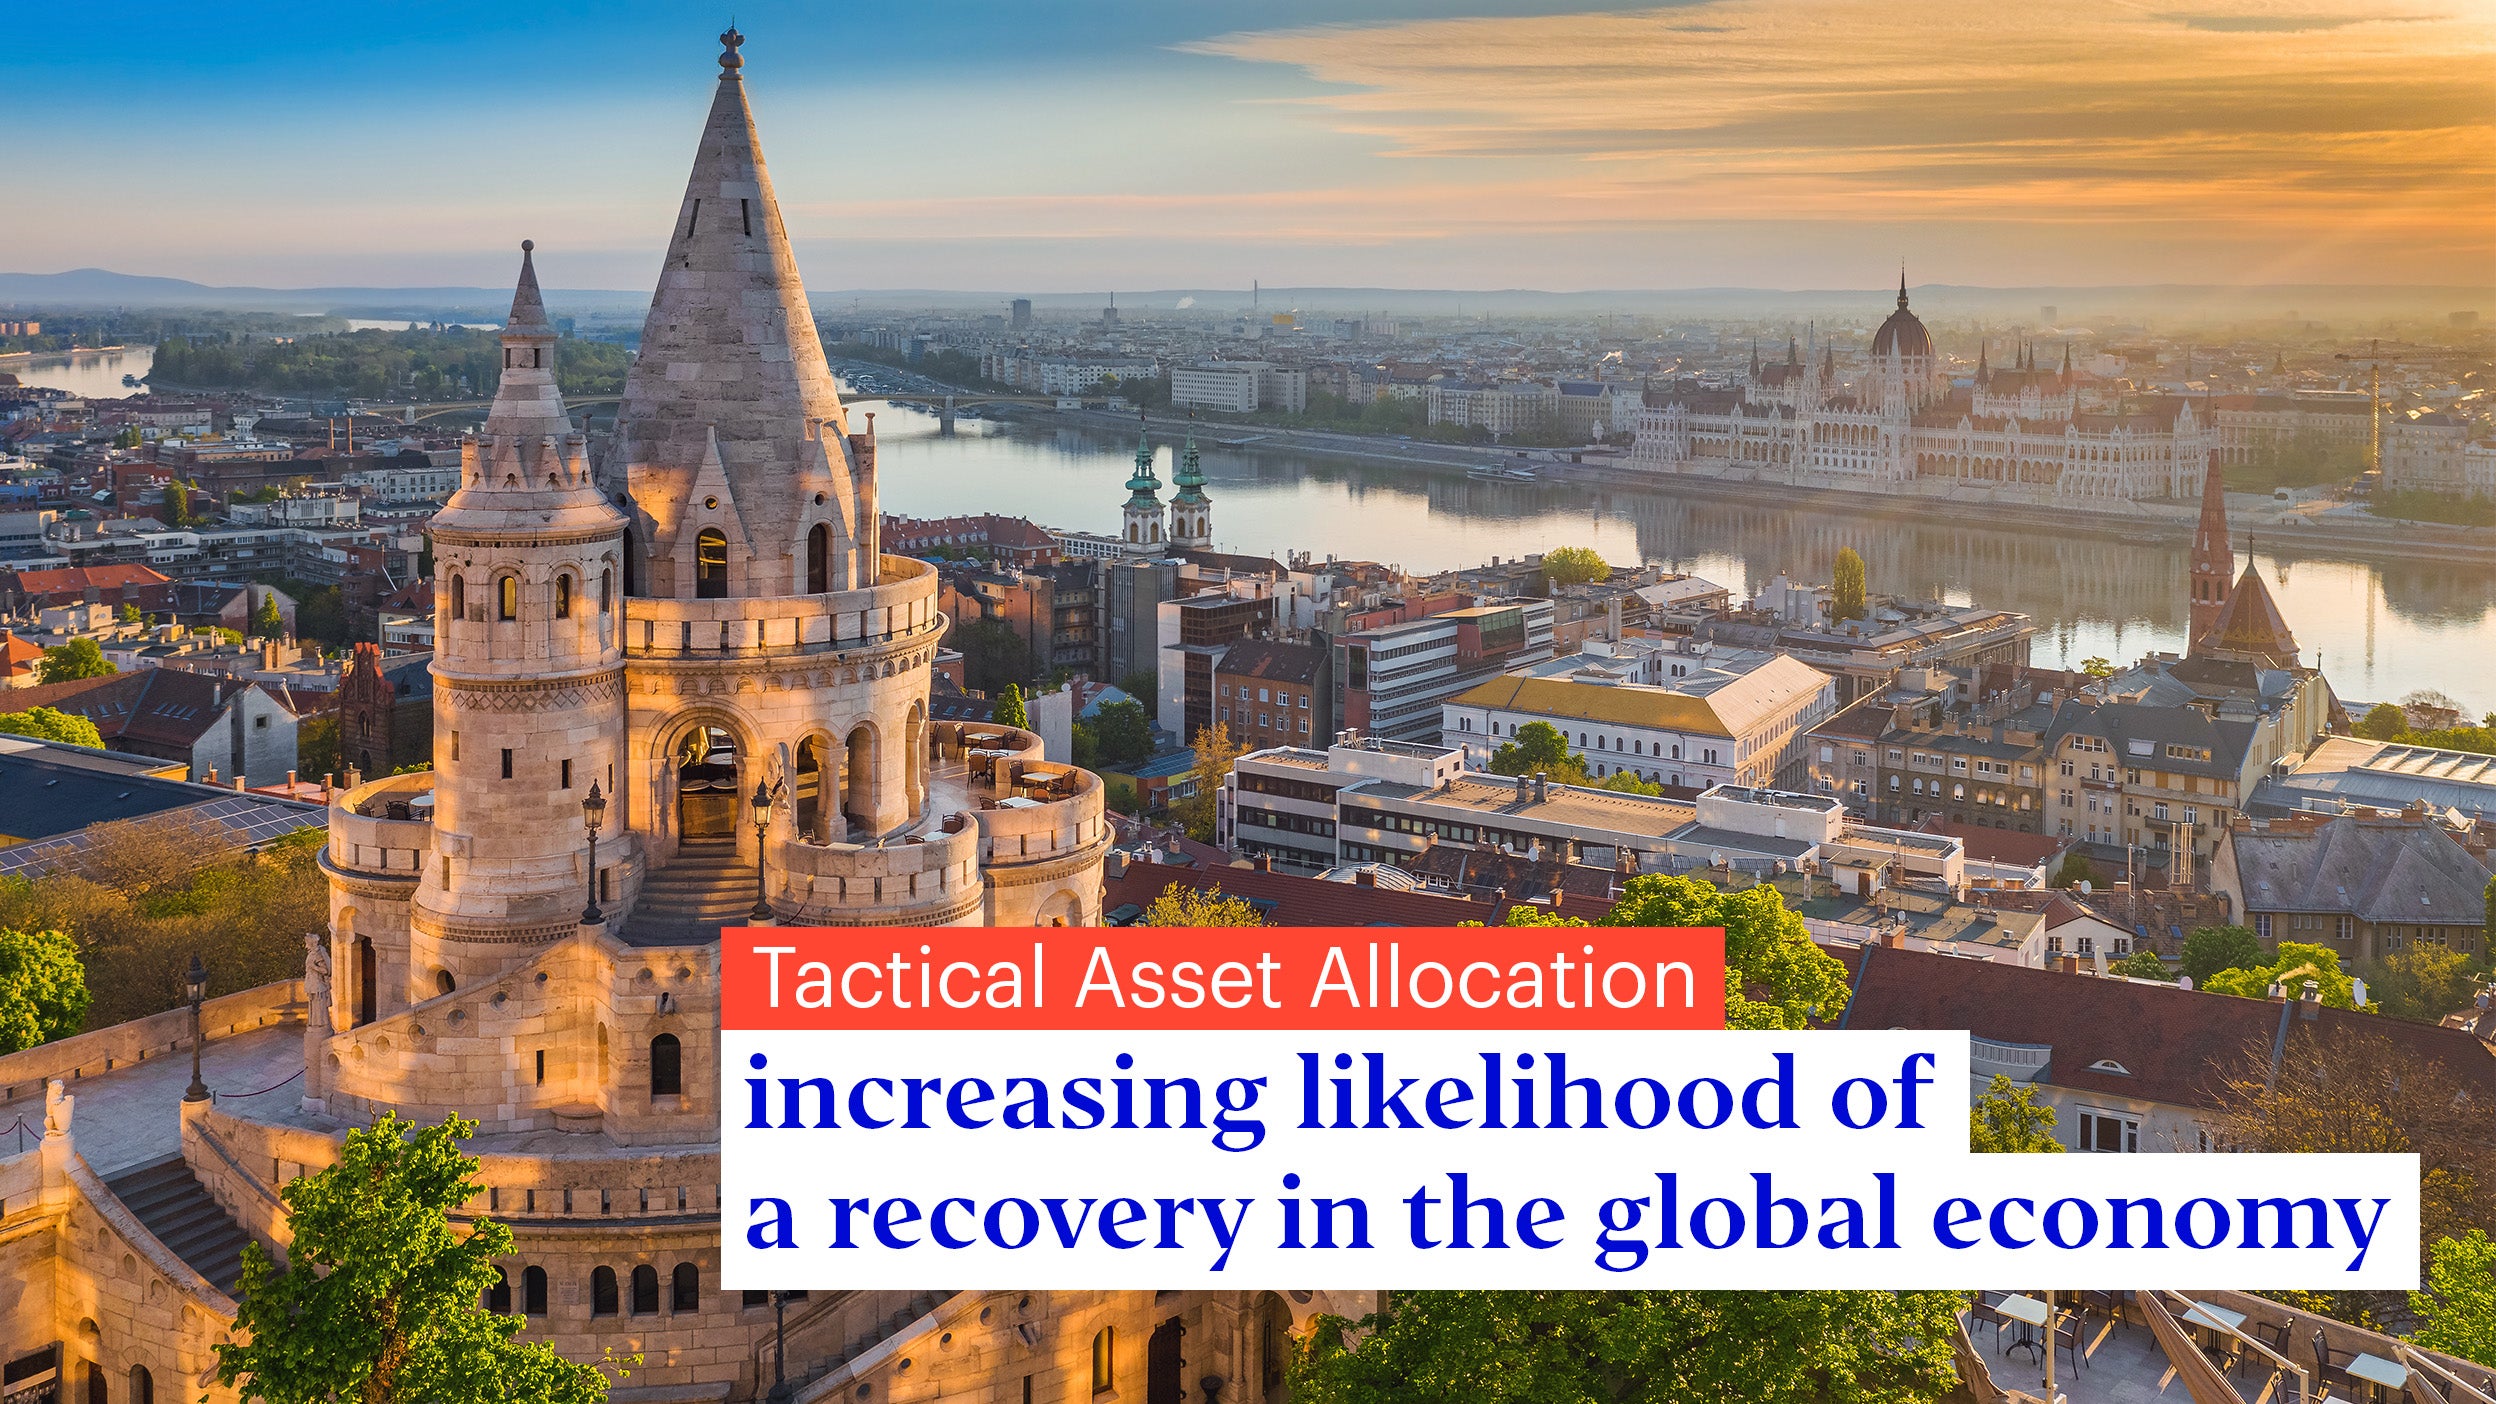 Tactical asset allocation views: Market sentiment continues to improve